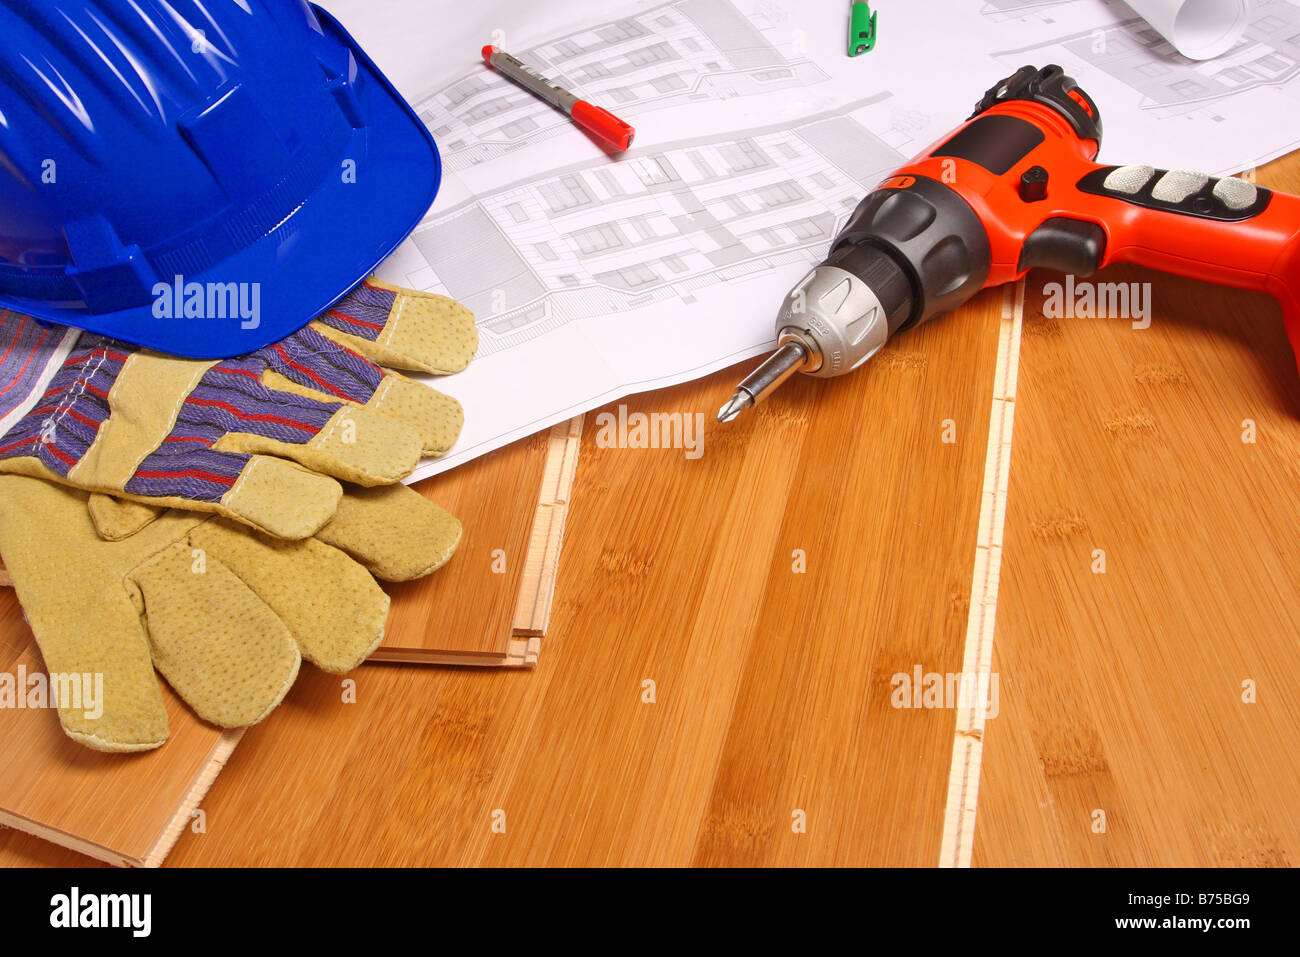 helmet gloves drill and blueprint on wood floor Stock Photo